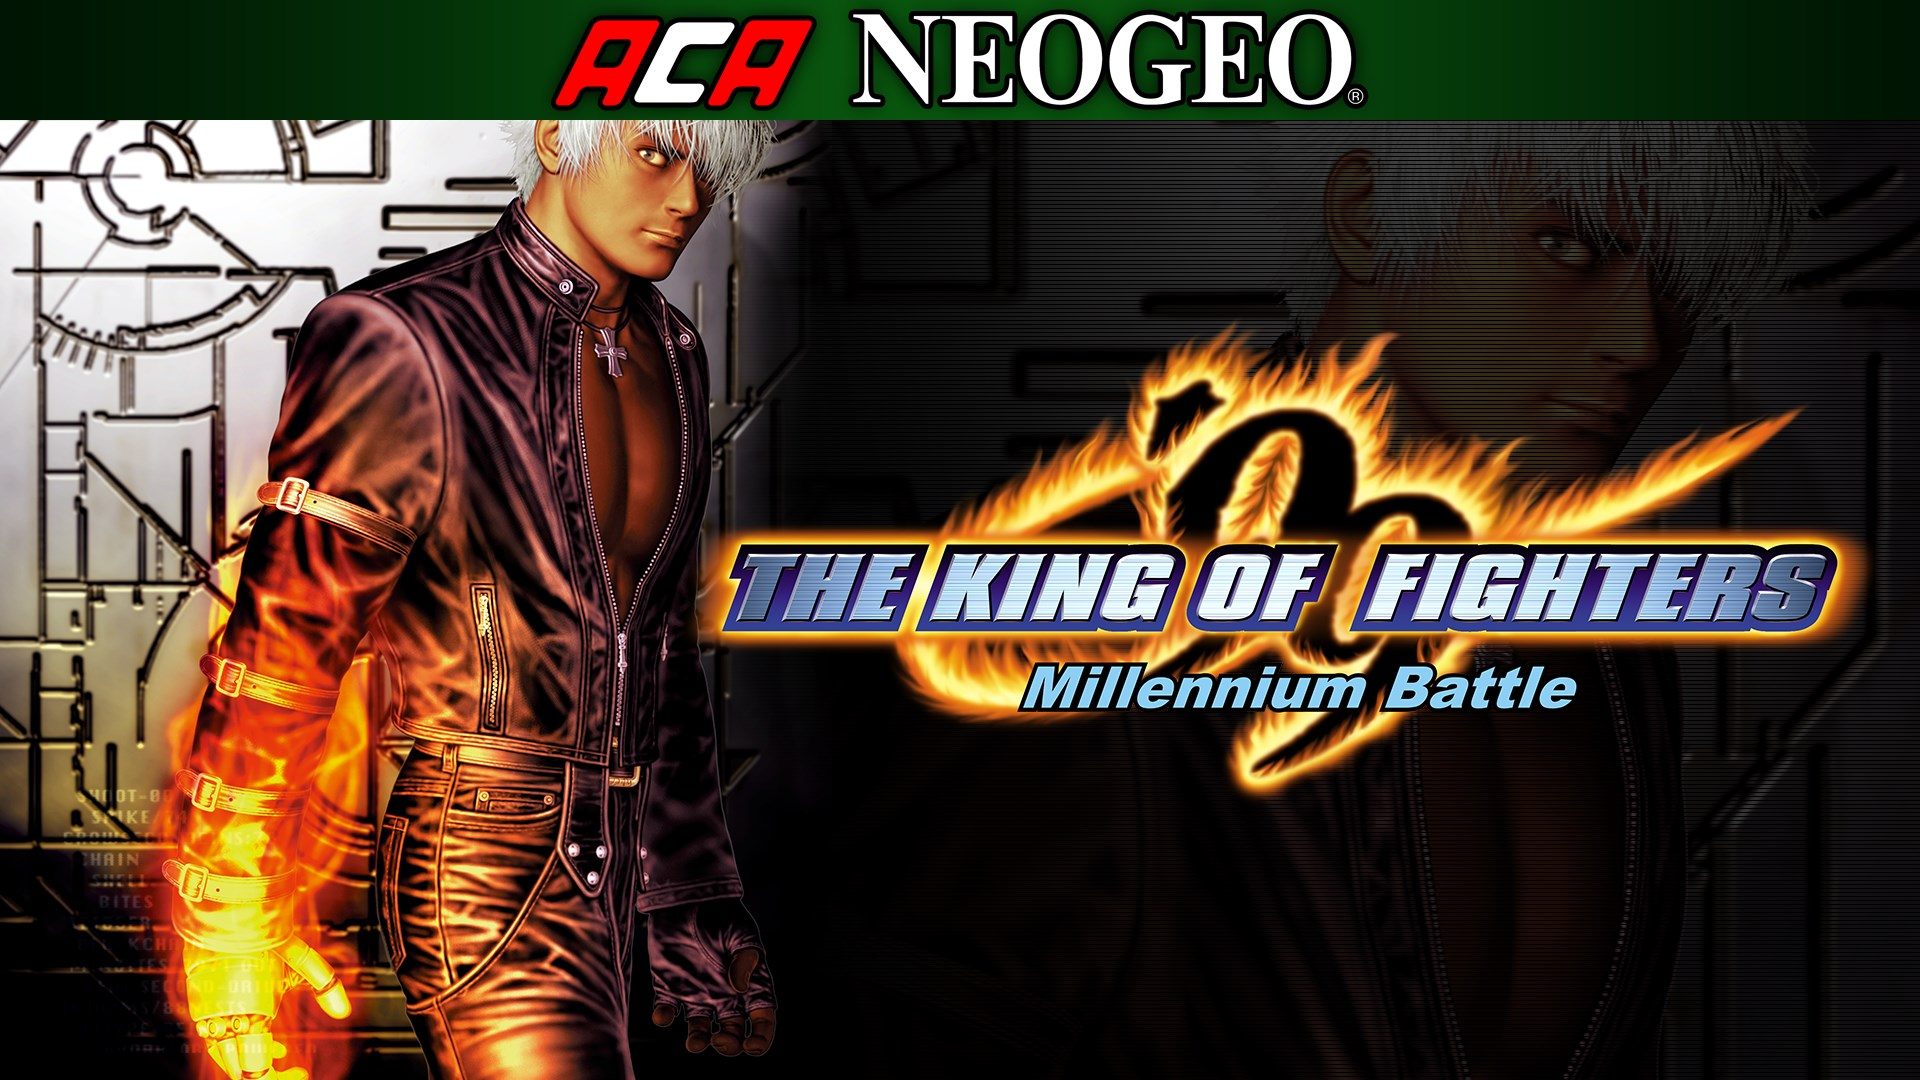 ACA NEOGEO THE KING OF FIGHTERS '99